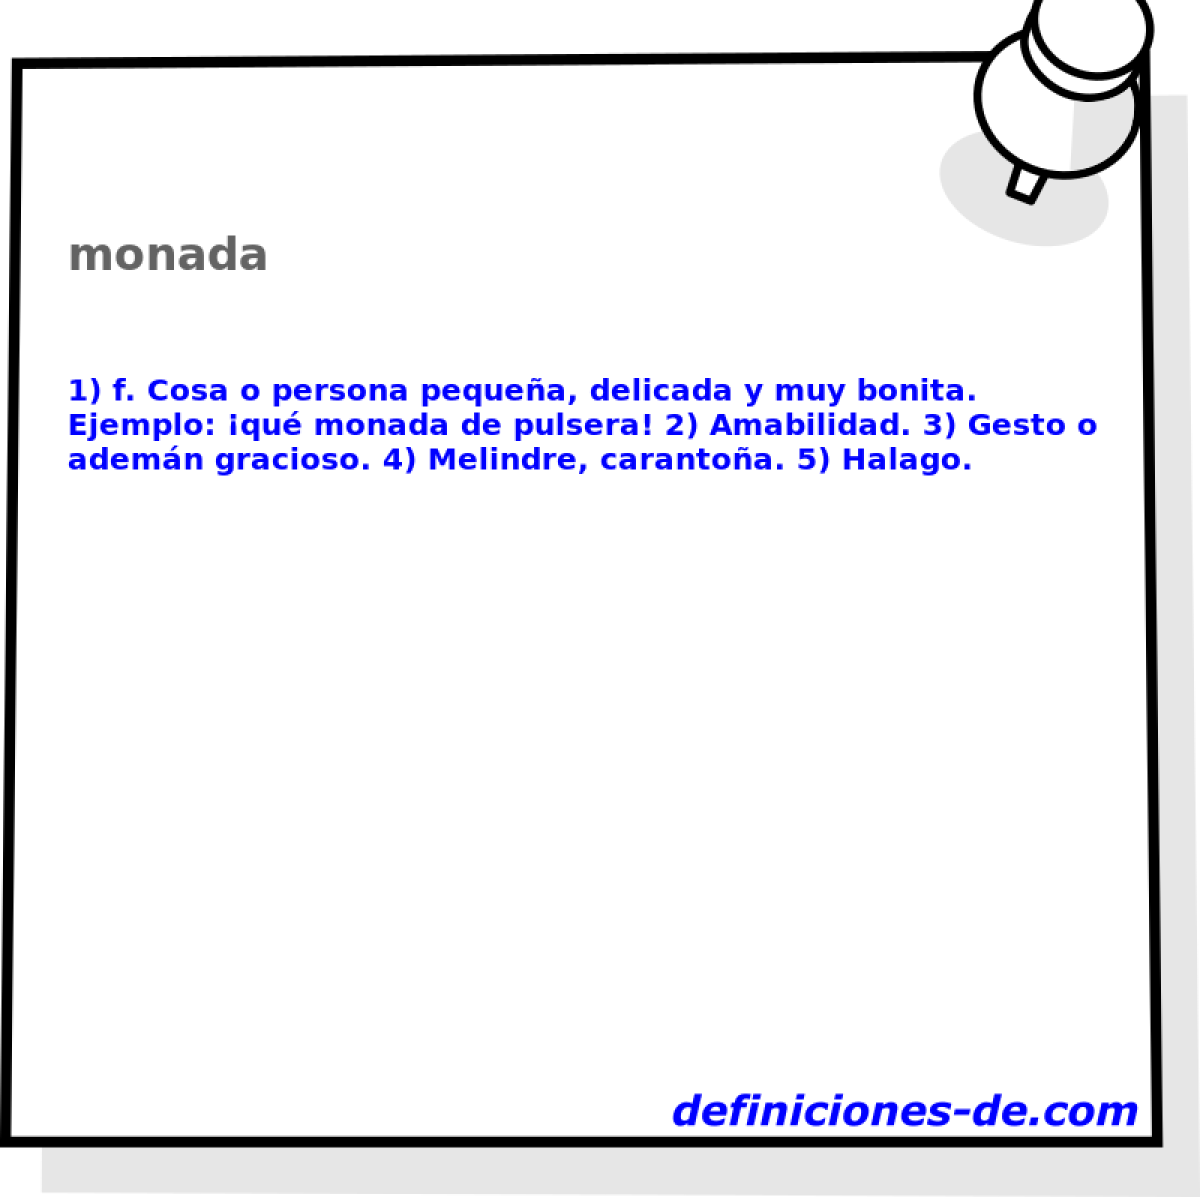 monada 